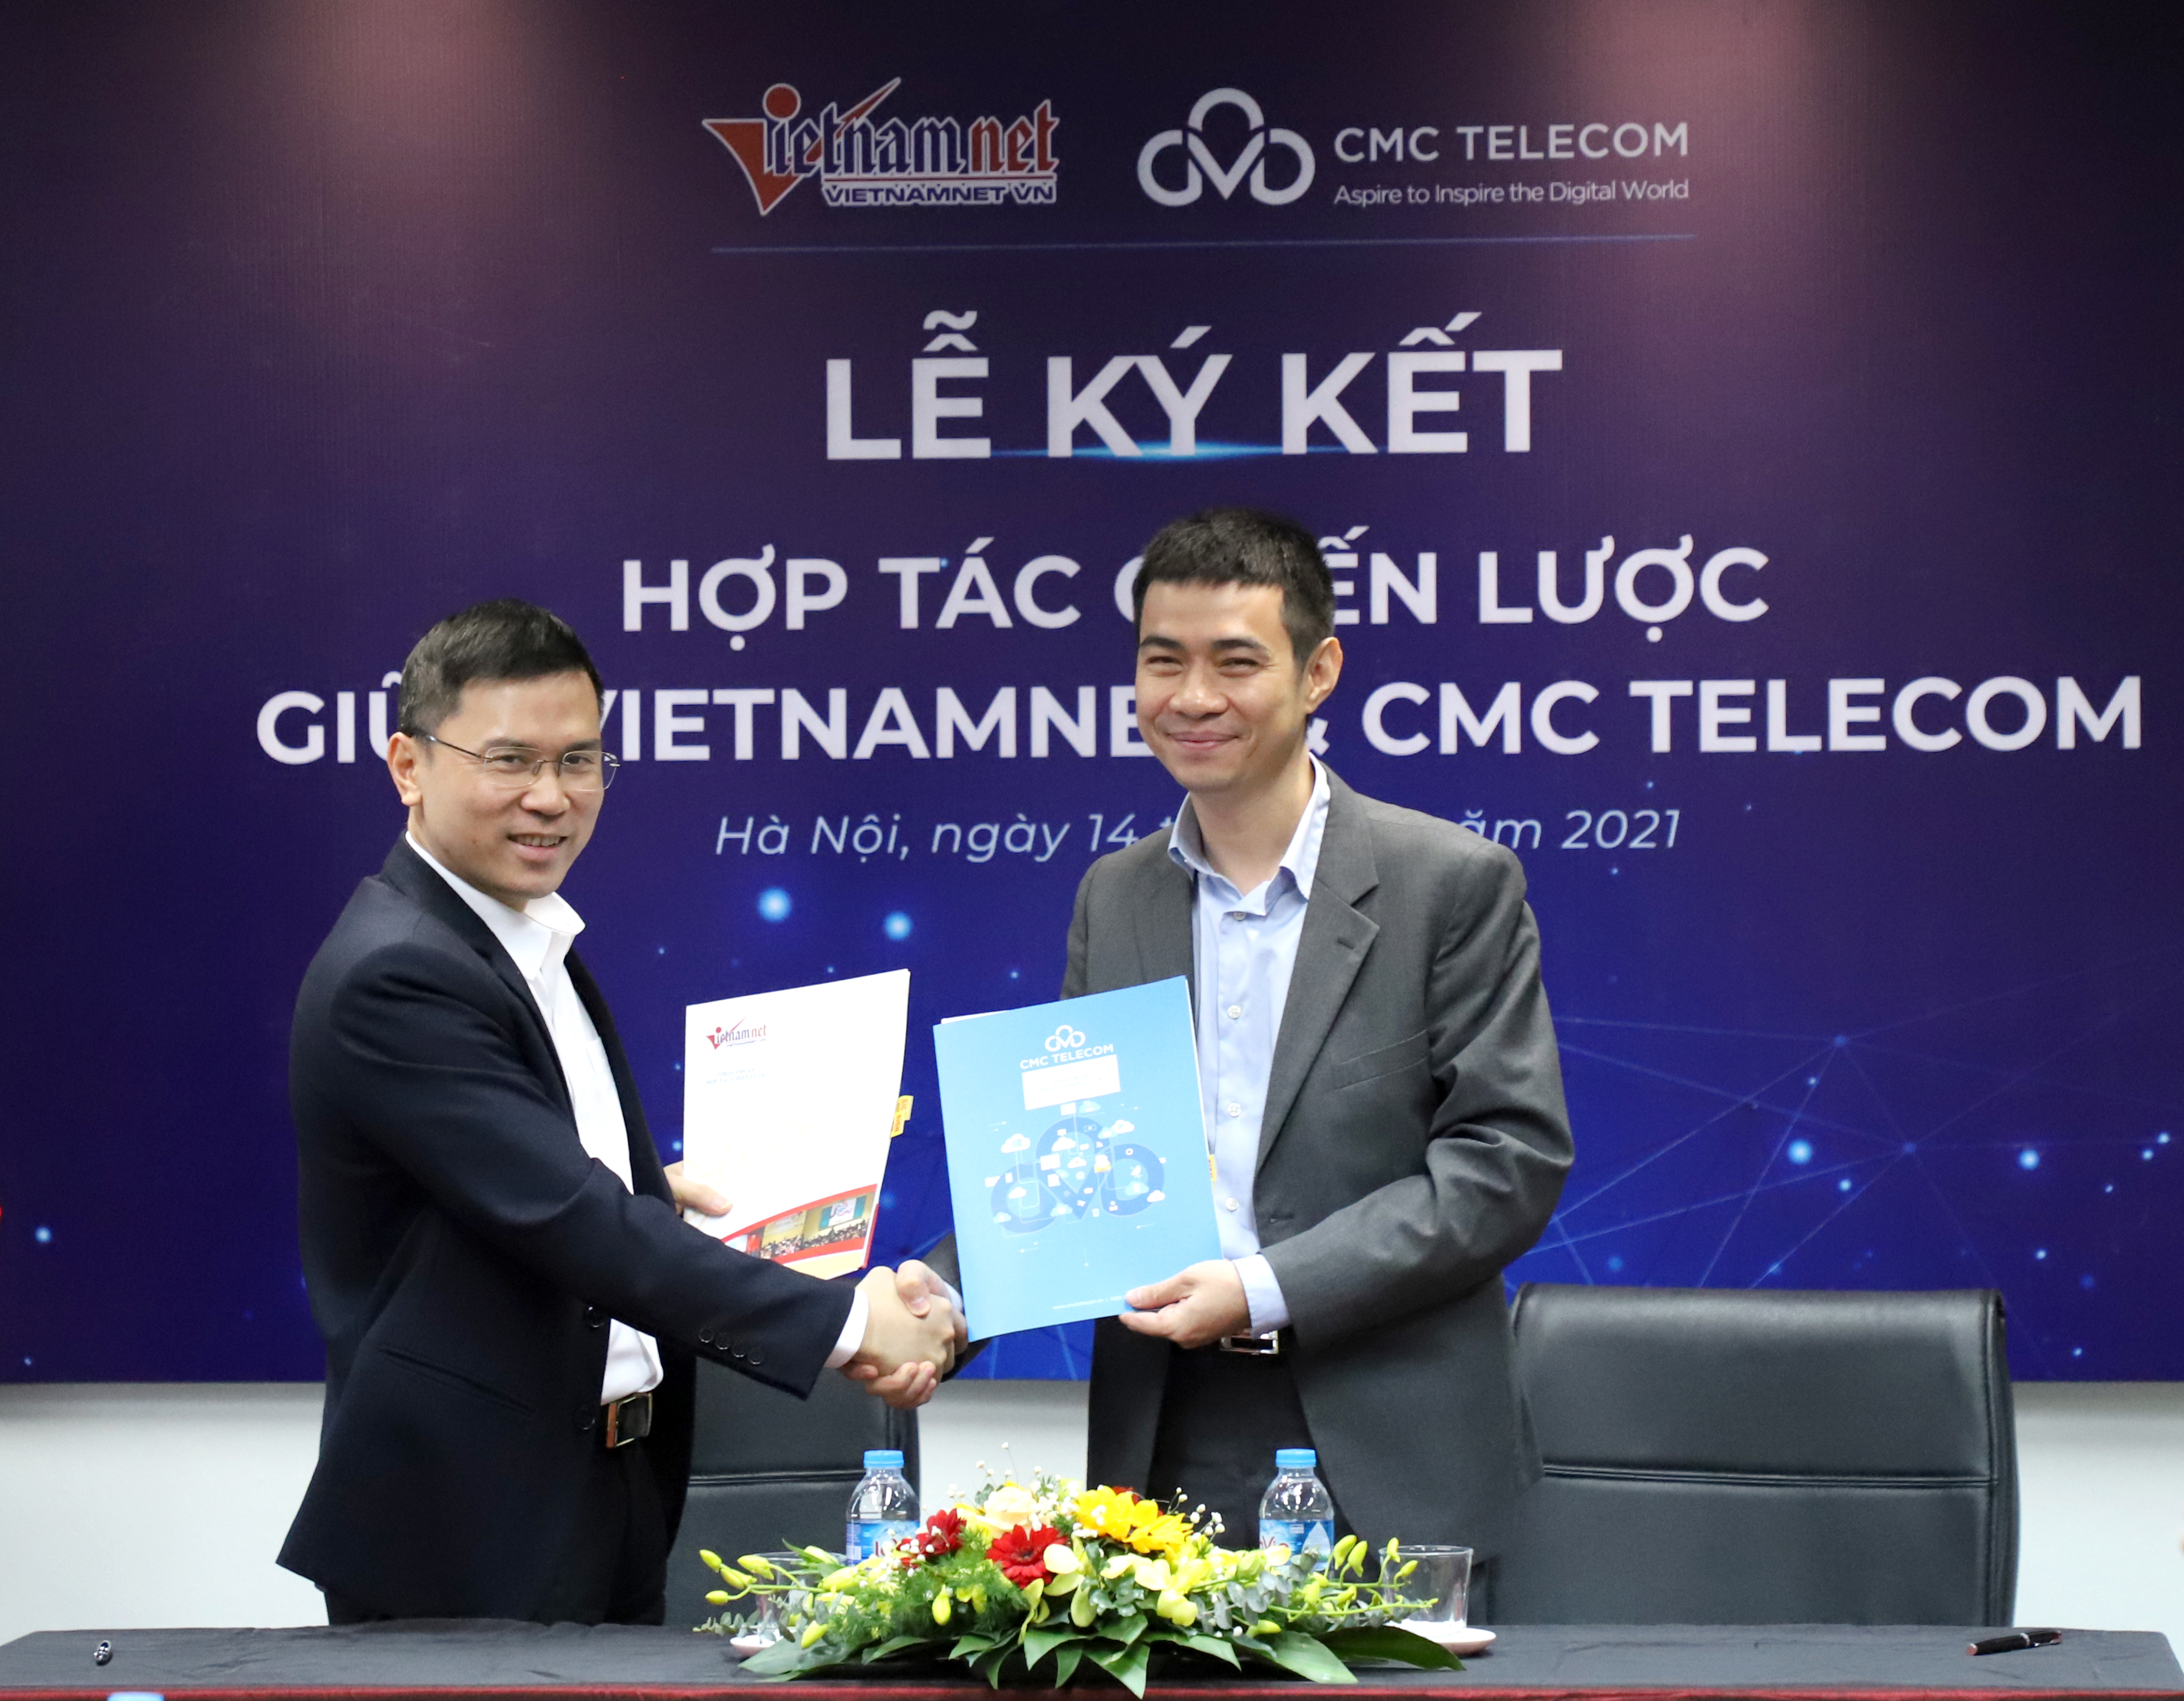 CMC Telecom becomes a strategic partner for digital transformation of VietNamNet